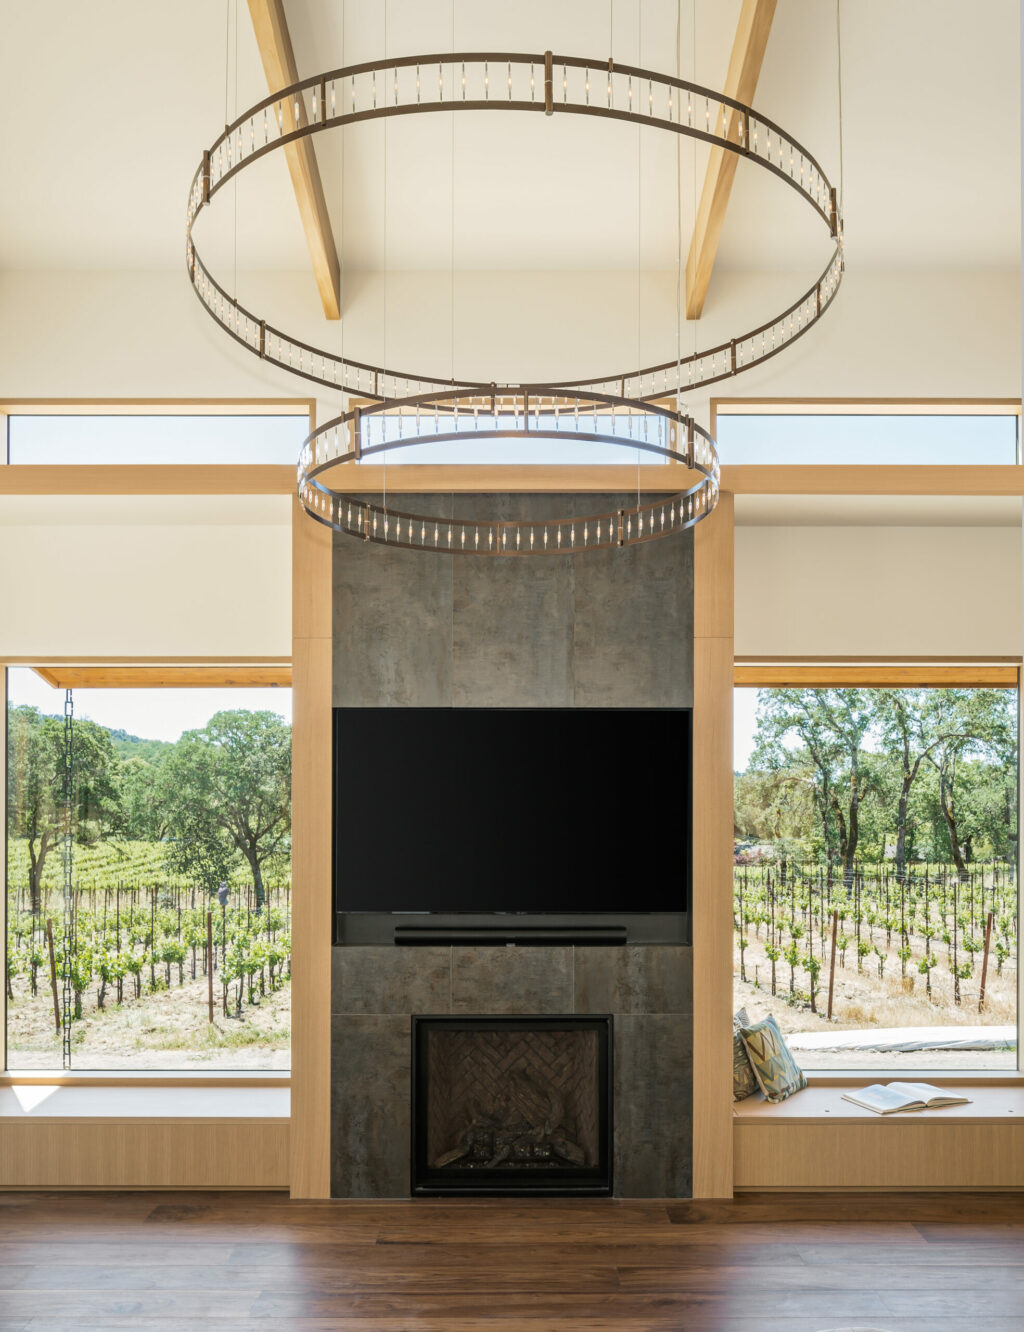 Fireplace and vineyard views. (Adam Potts Photography)